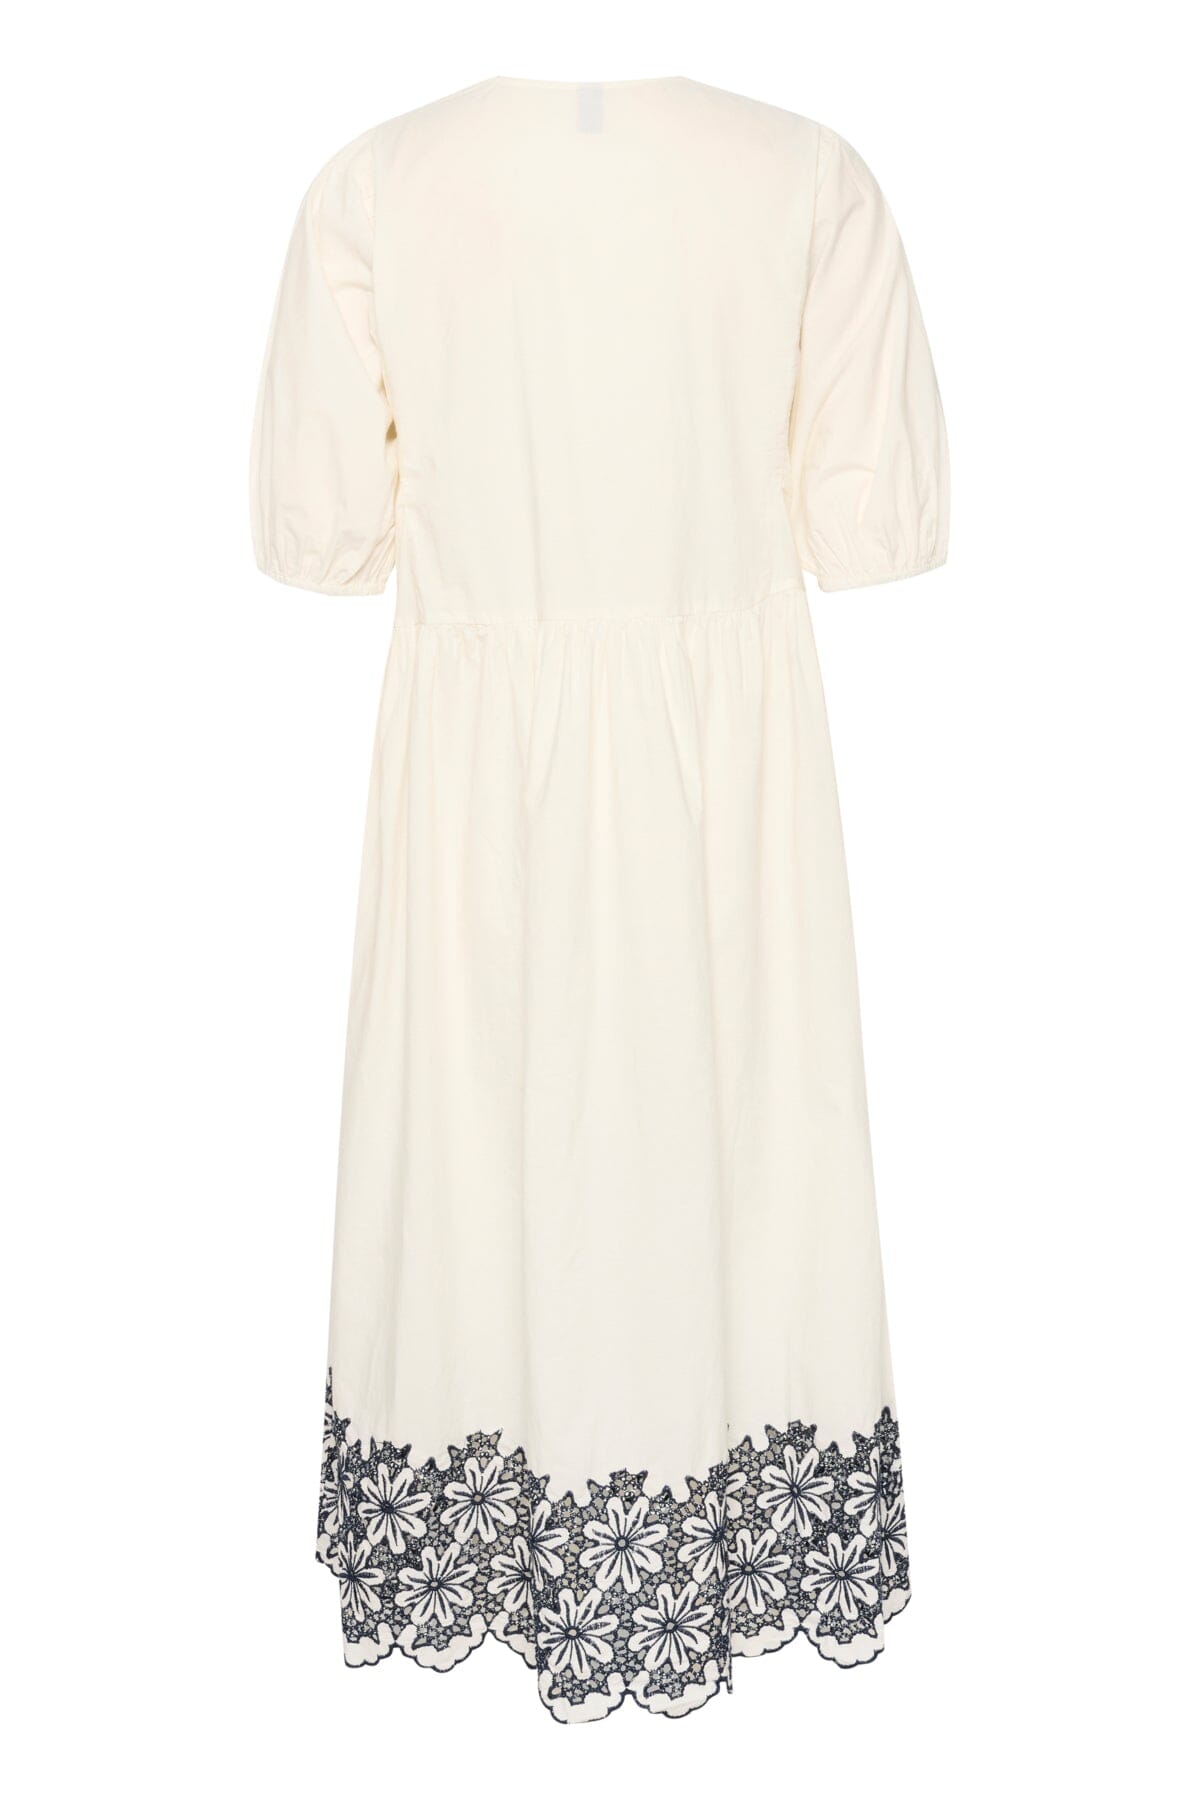 Valda Dress in White Dress Culture 